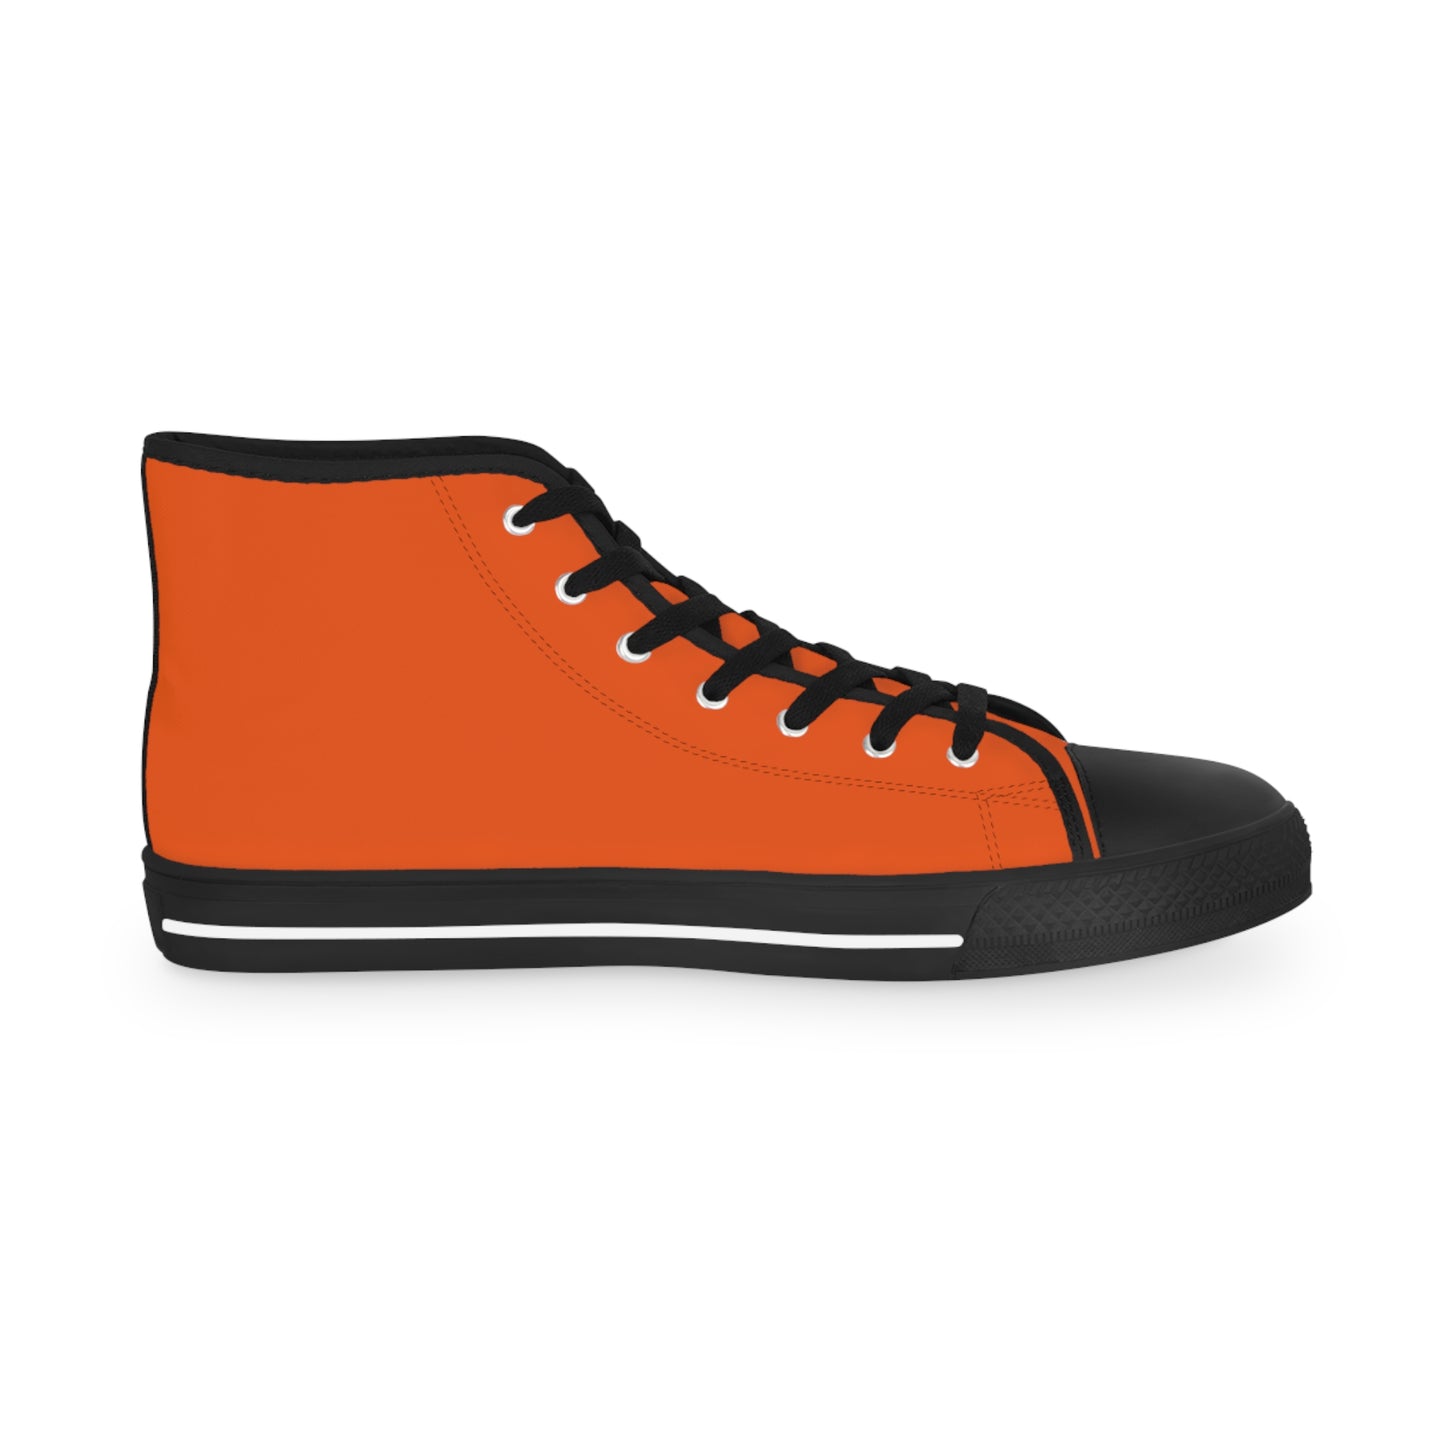 Men's High Top Sneakers - Dark Orange US 14 White sole